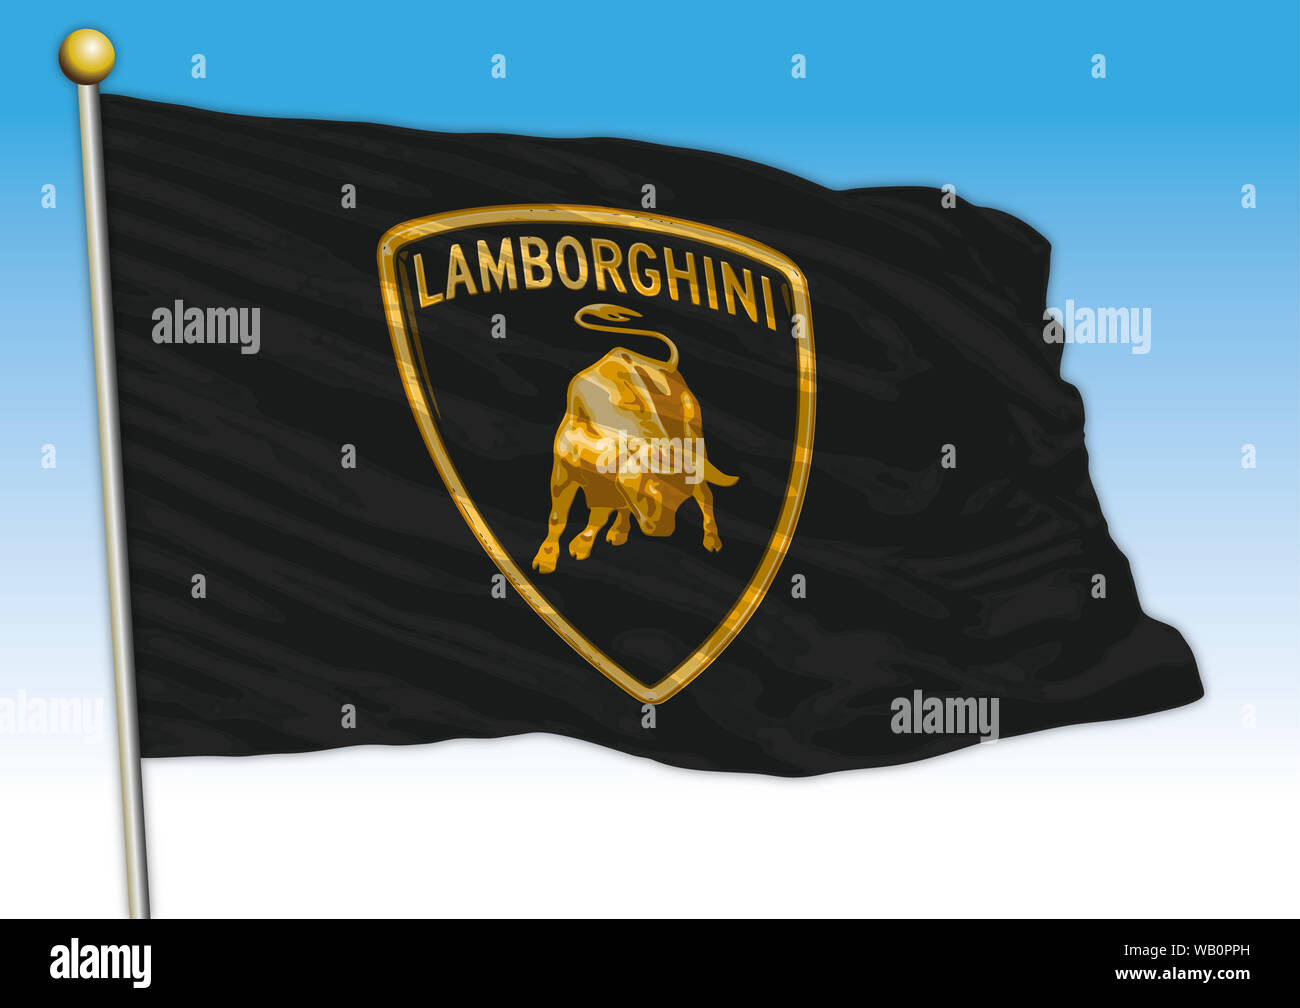 Lamborghini international car industrial group, flag with logo, illustration Stock Photo